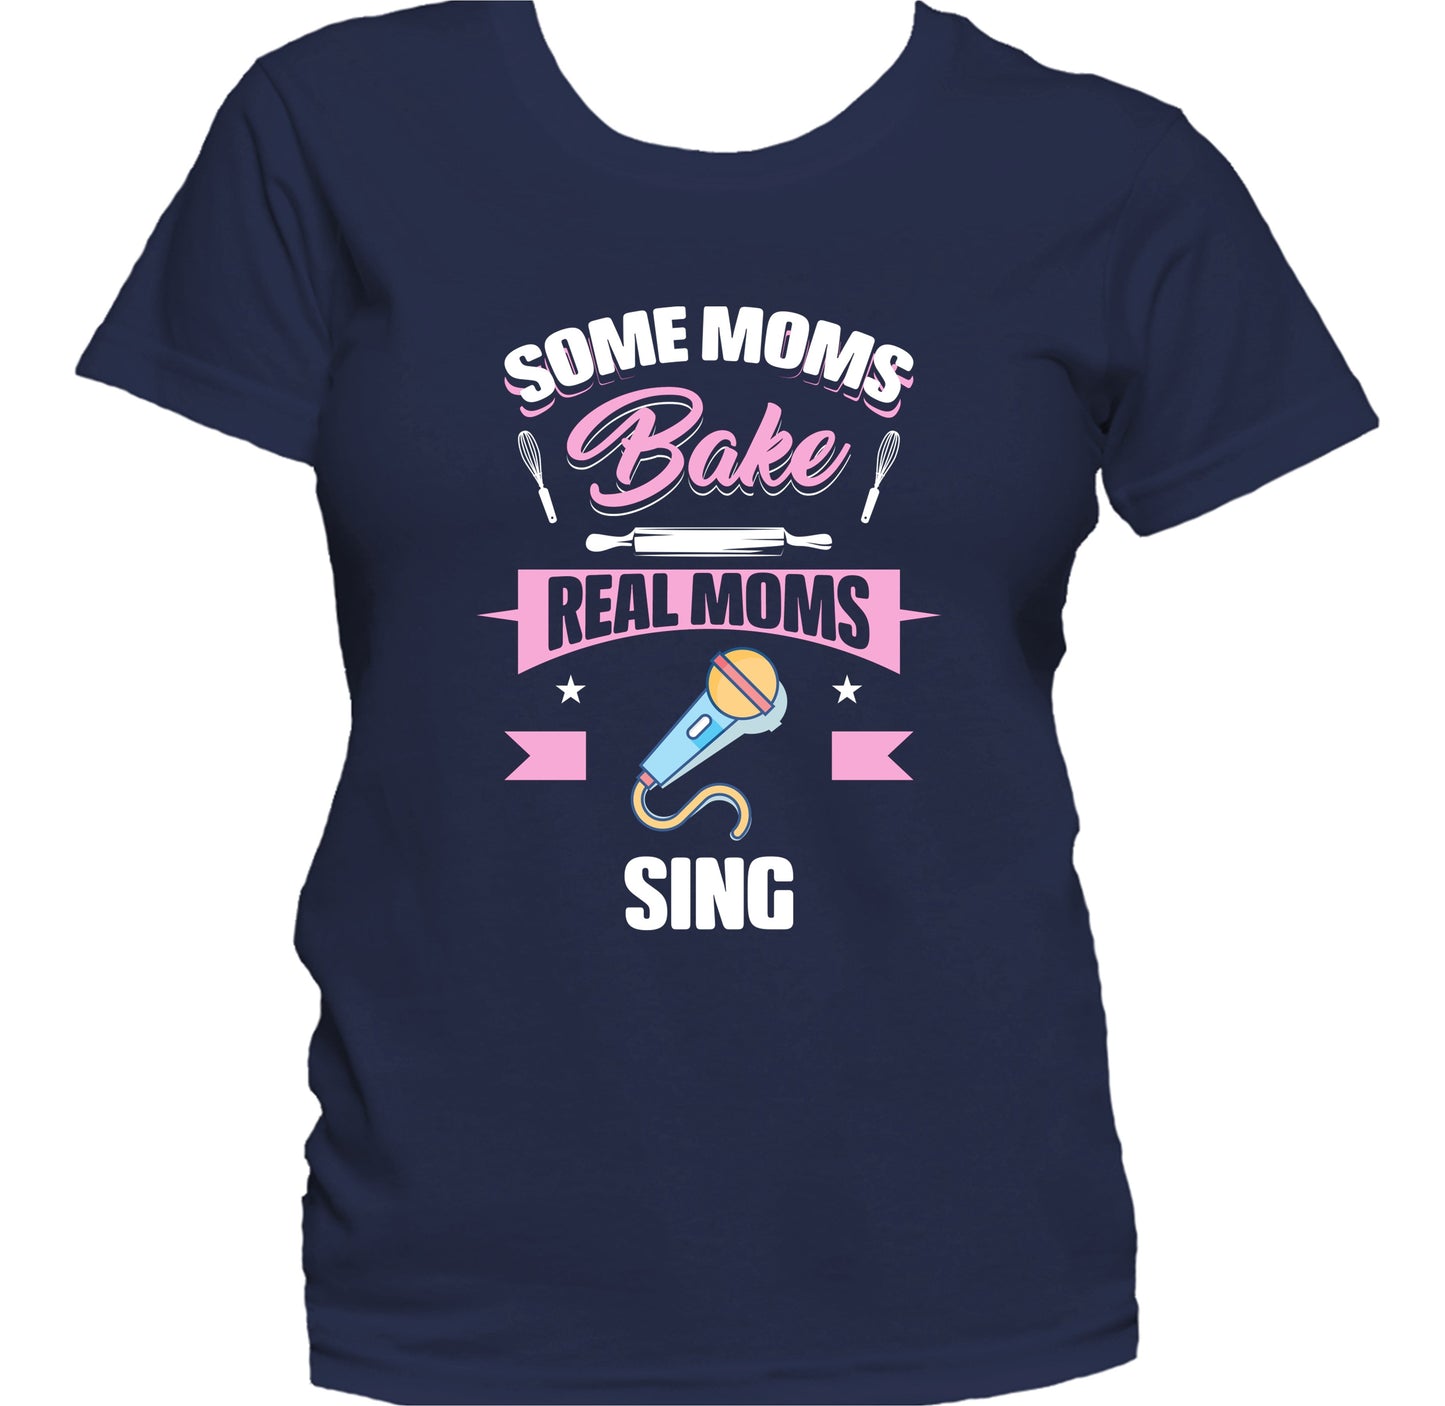 Some Moms Bake Real Moms Sing Funny Singing Mom Women's T-Shirt